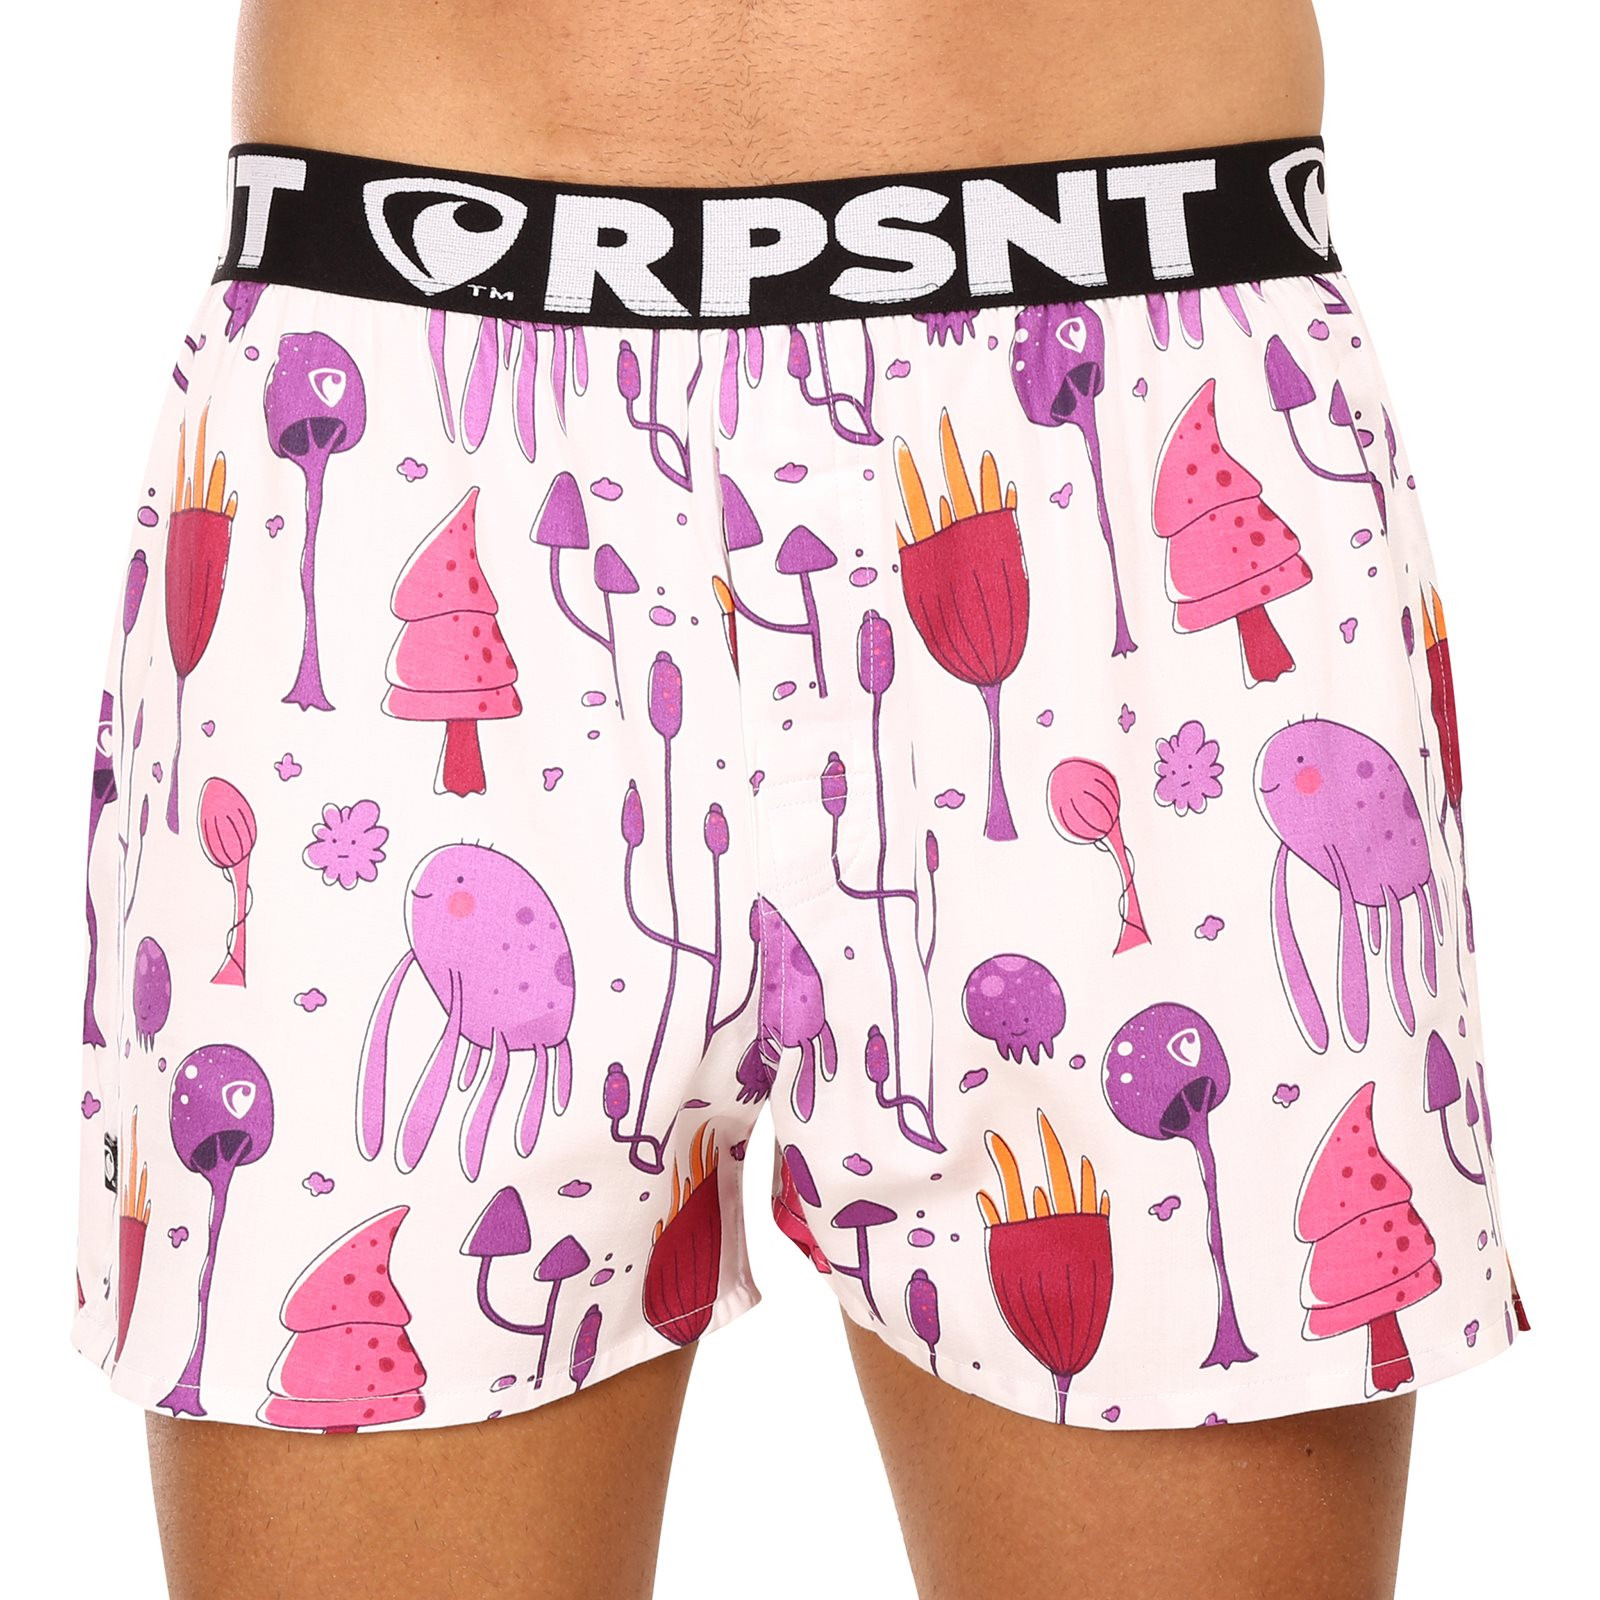 Men's shorts Represent exclusive Mike violet creatures